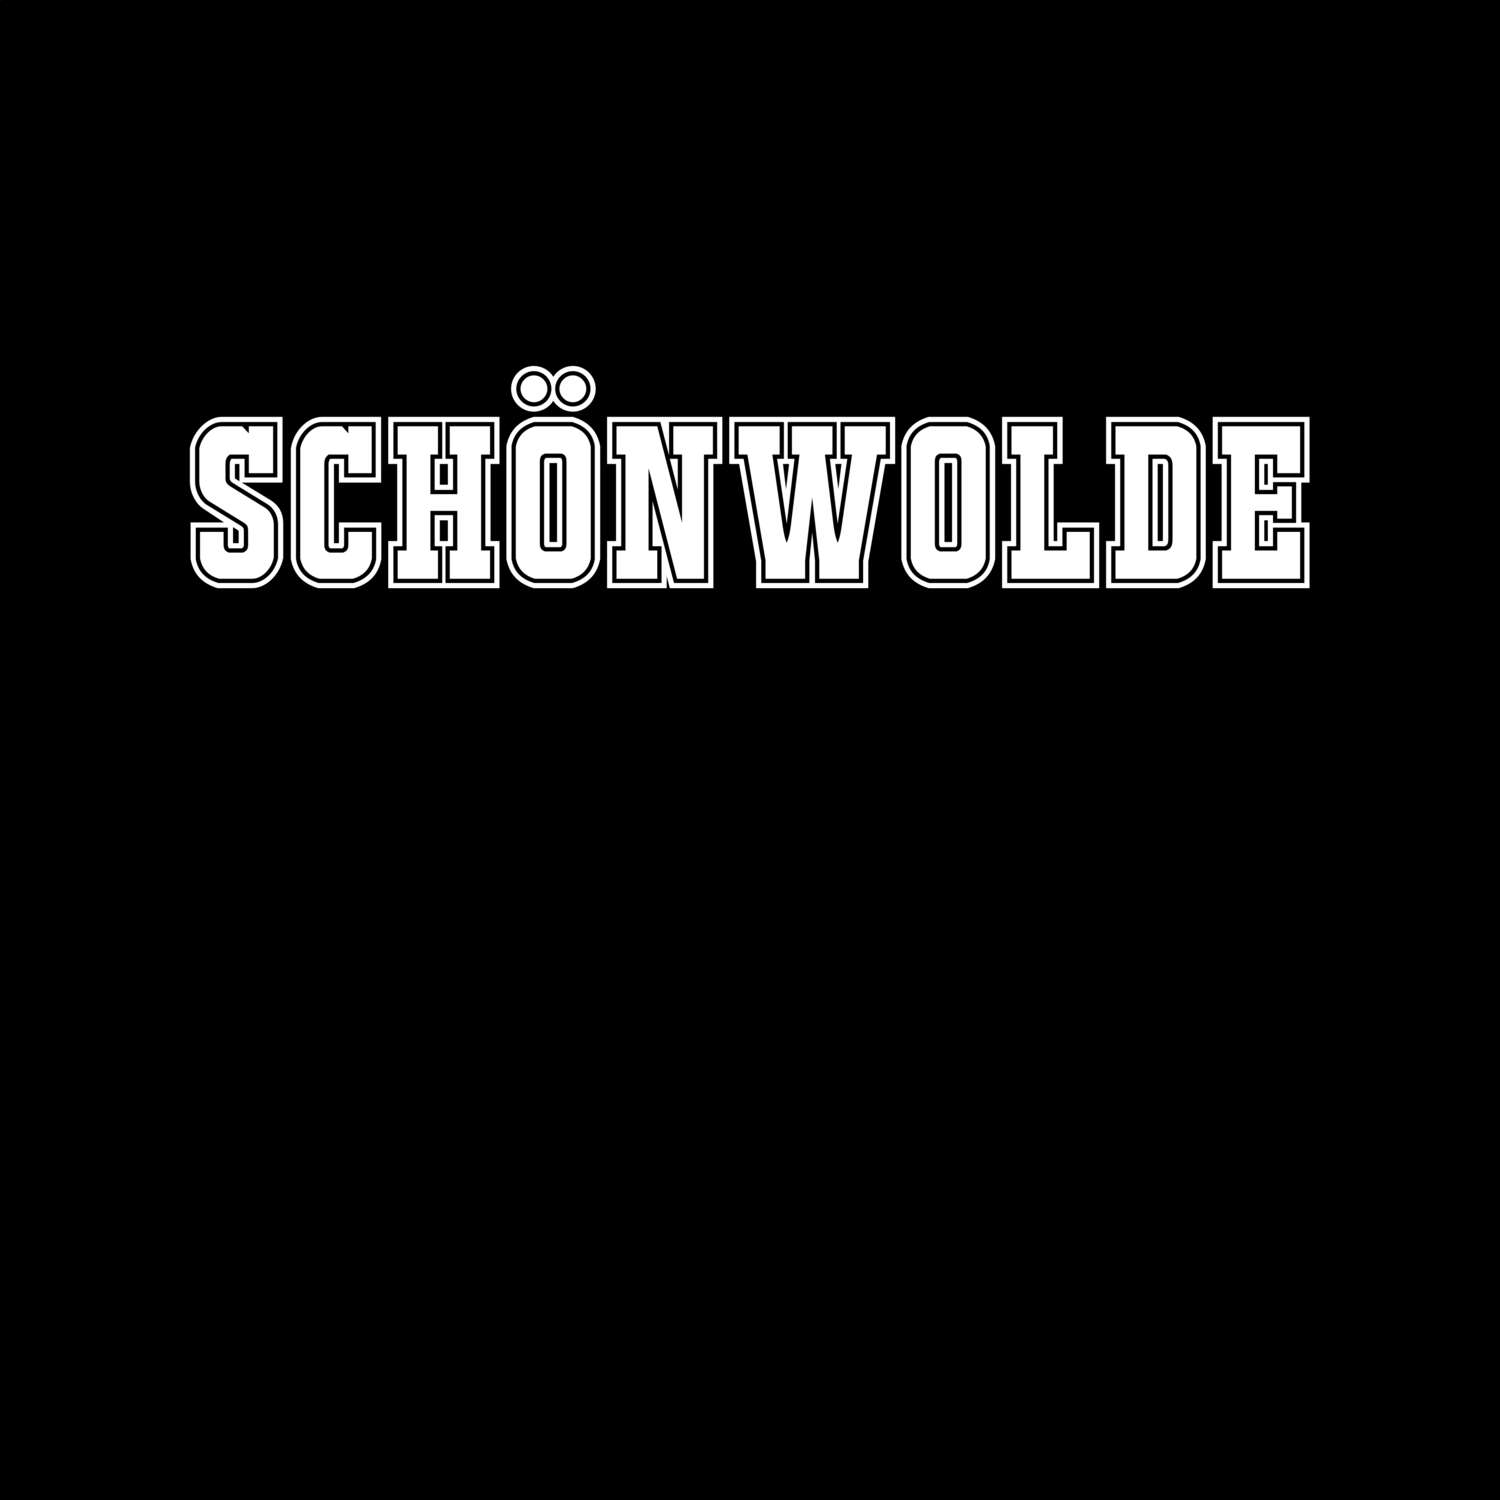 Schönwolde T-Shirt »Classic«